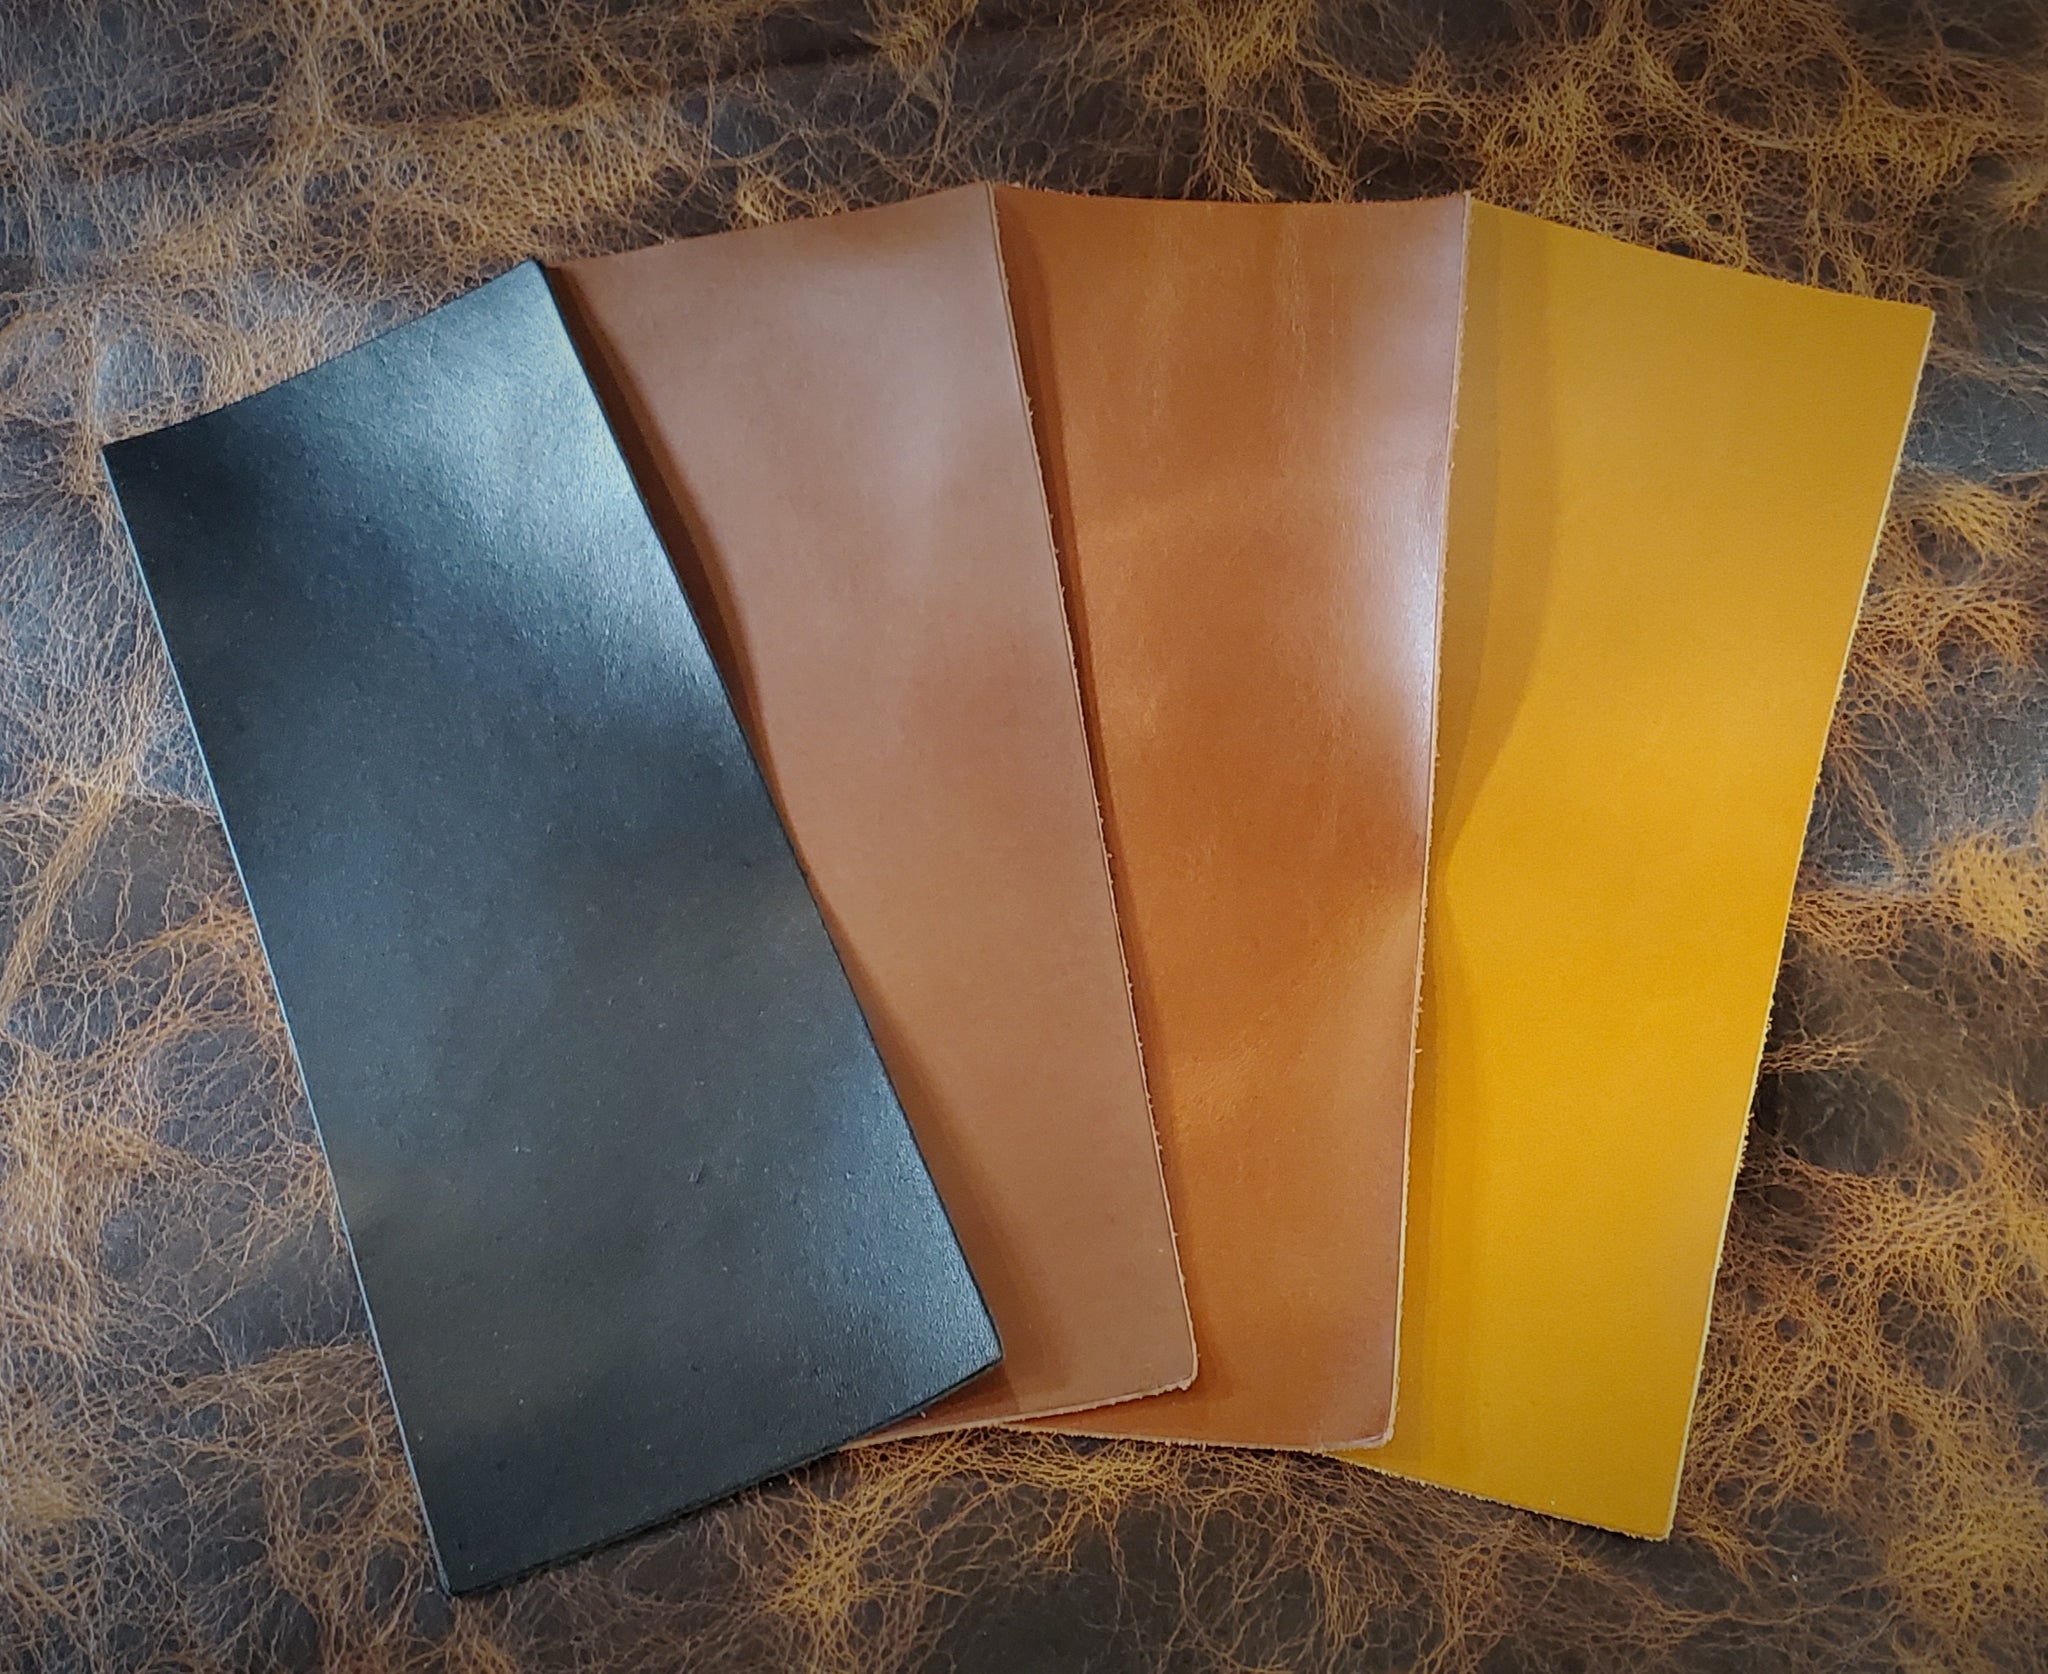 Large Leather Wallet Kit Chestnut / One Kit